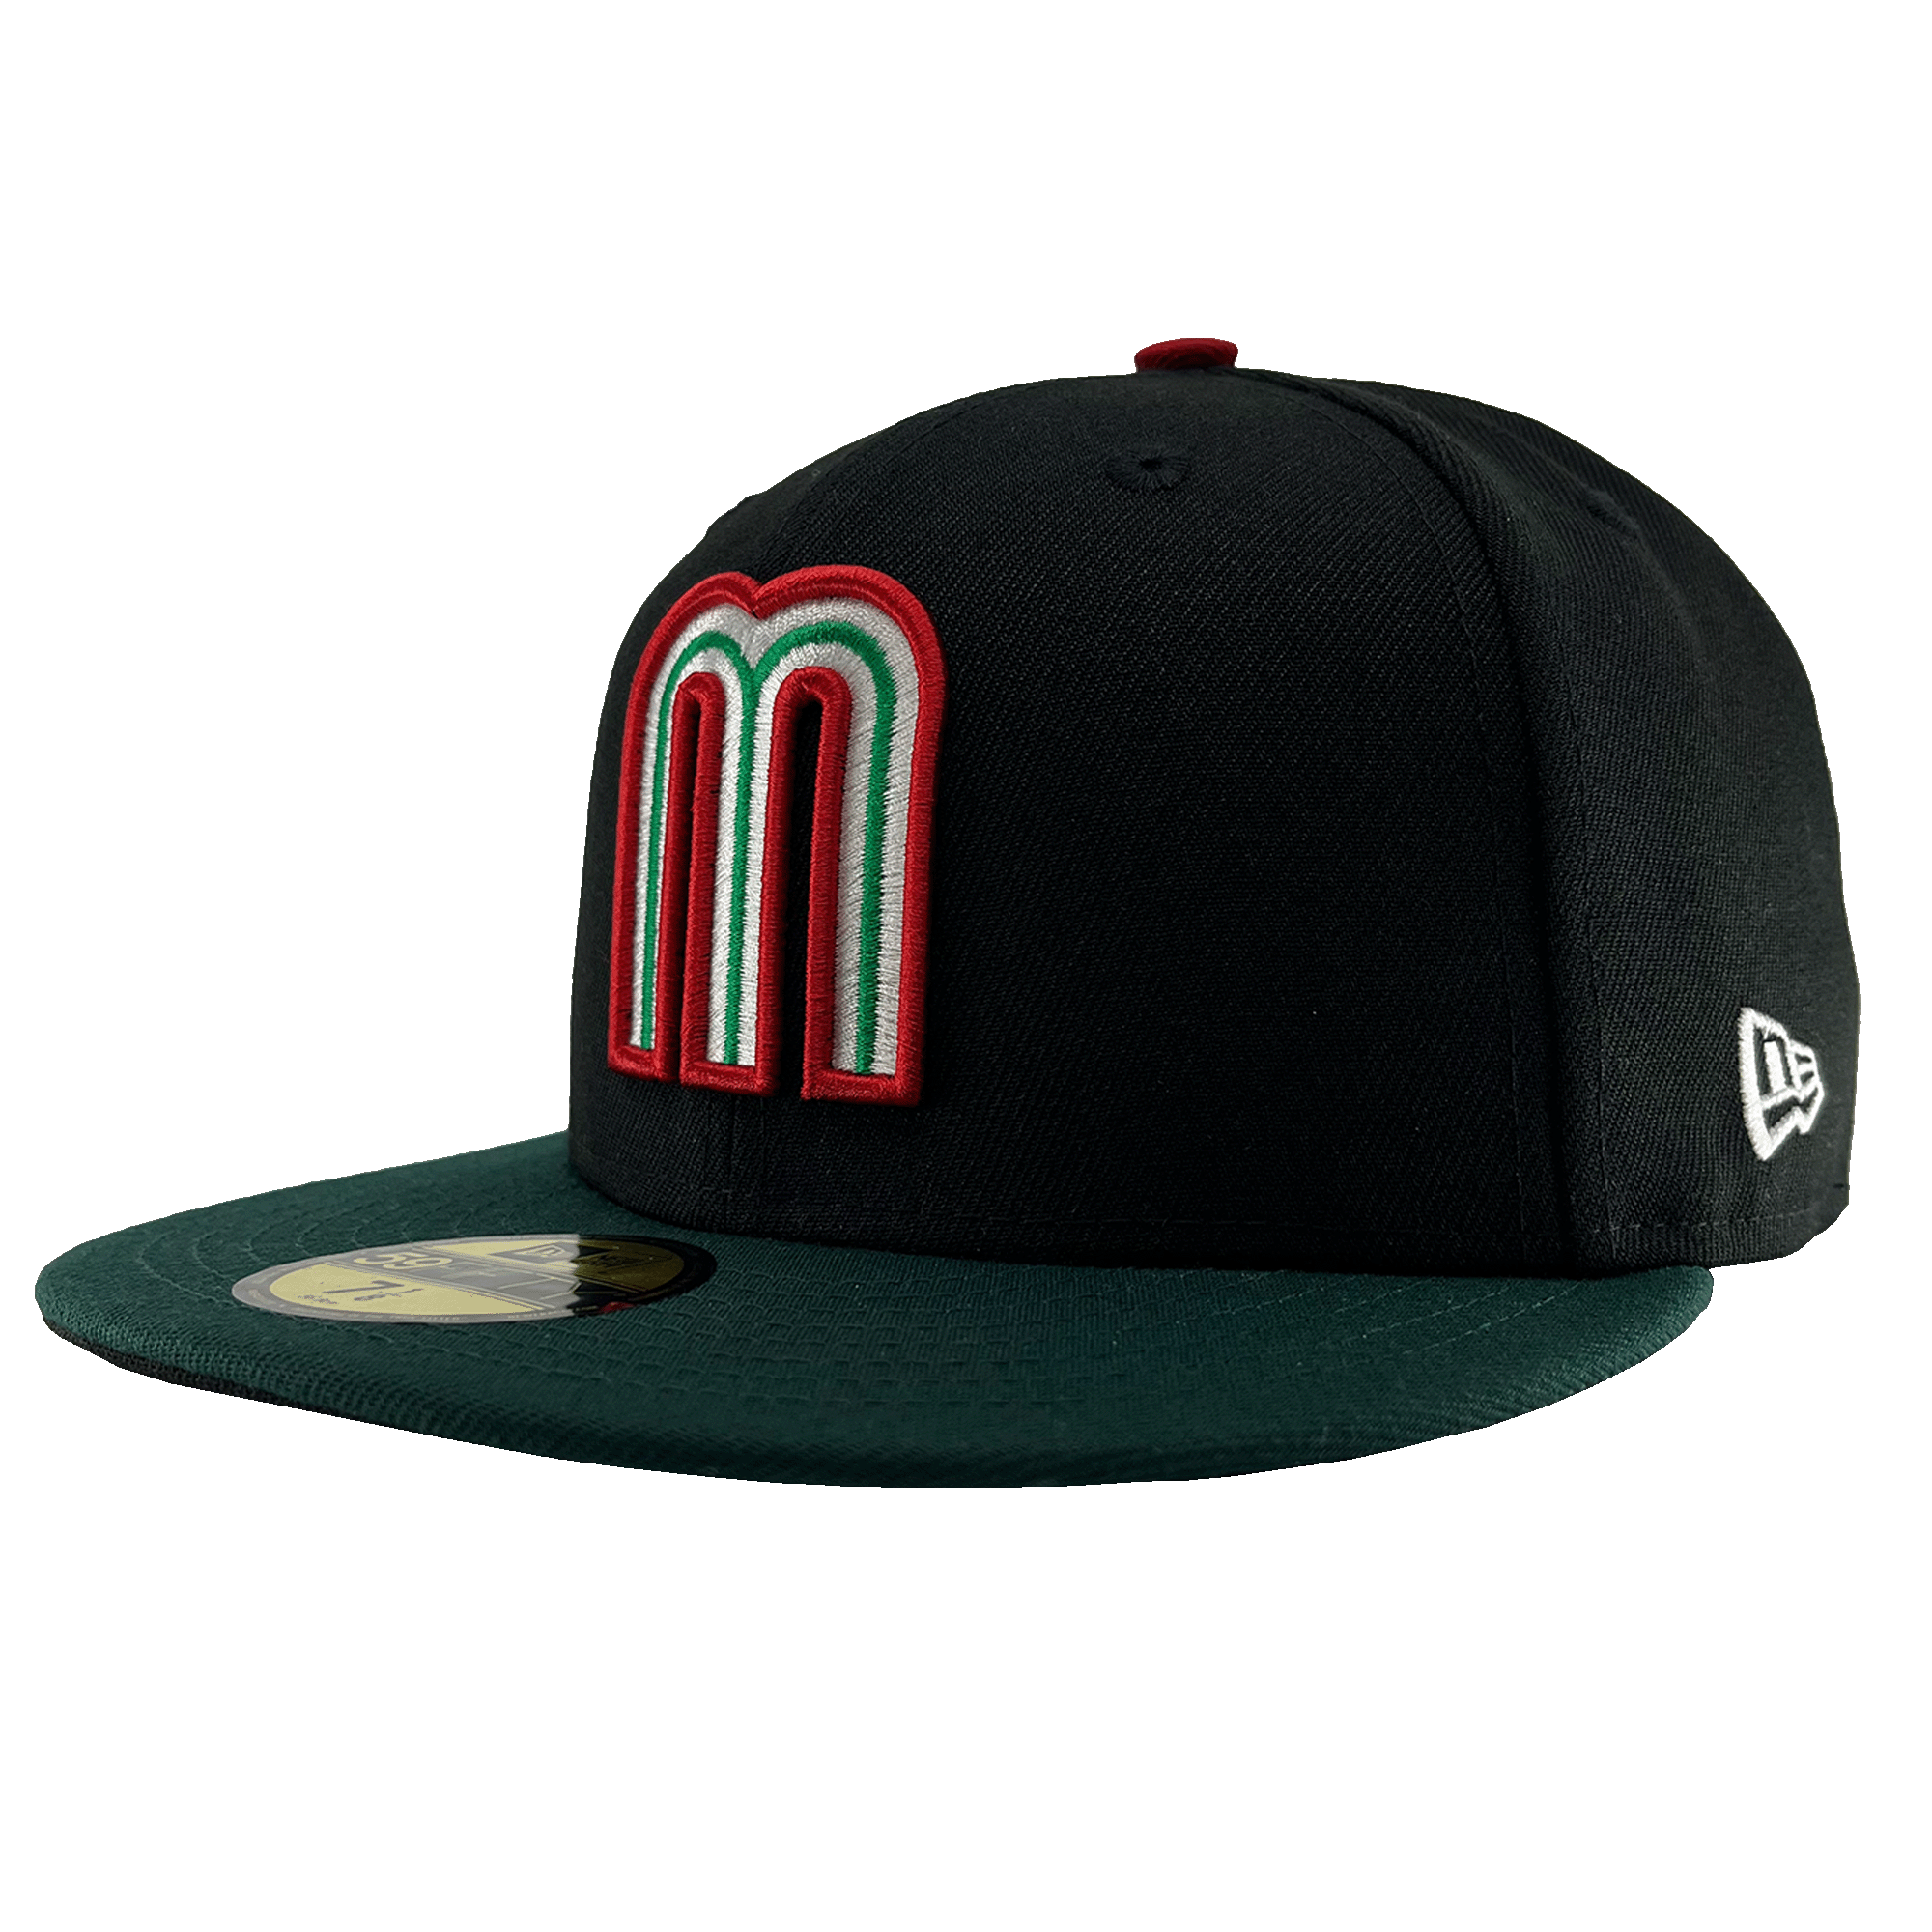 New Era 5950 Black and Dark Green WBC Mexico Hat.